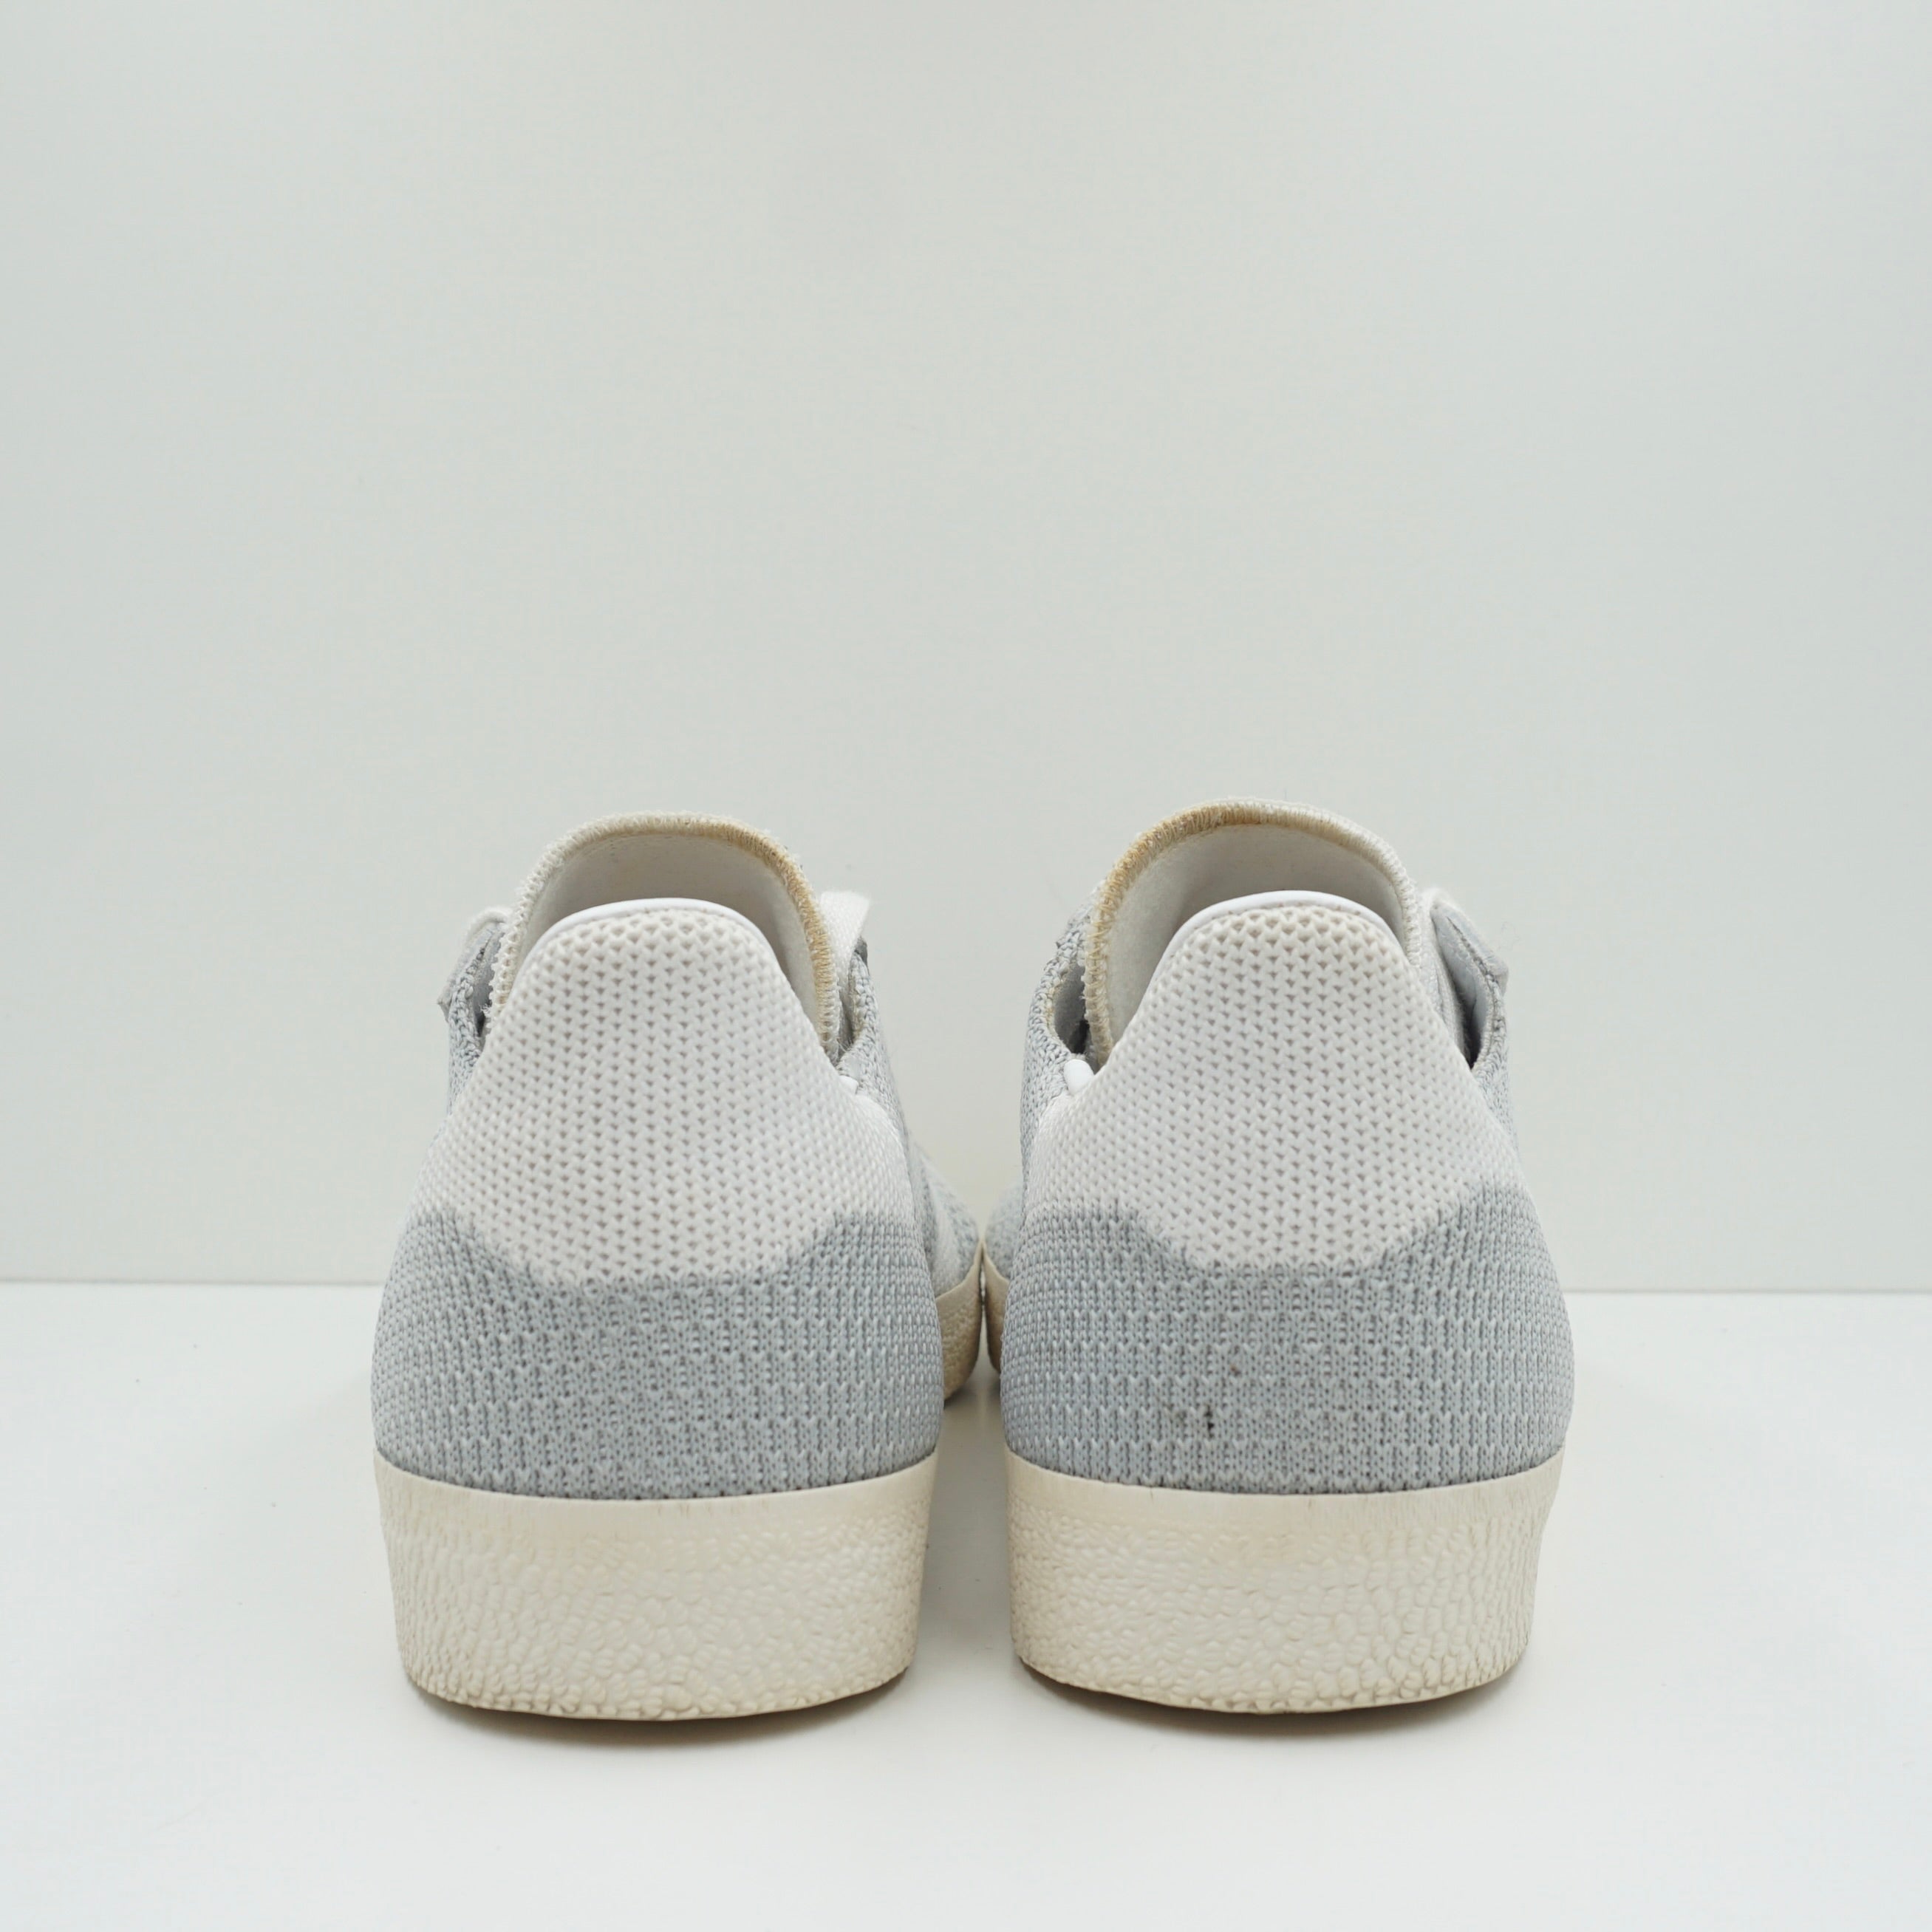 Adidas Orignal Gazelle Primeknit Onix/Chalk White